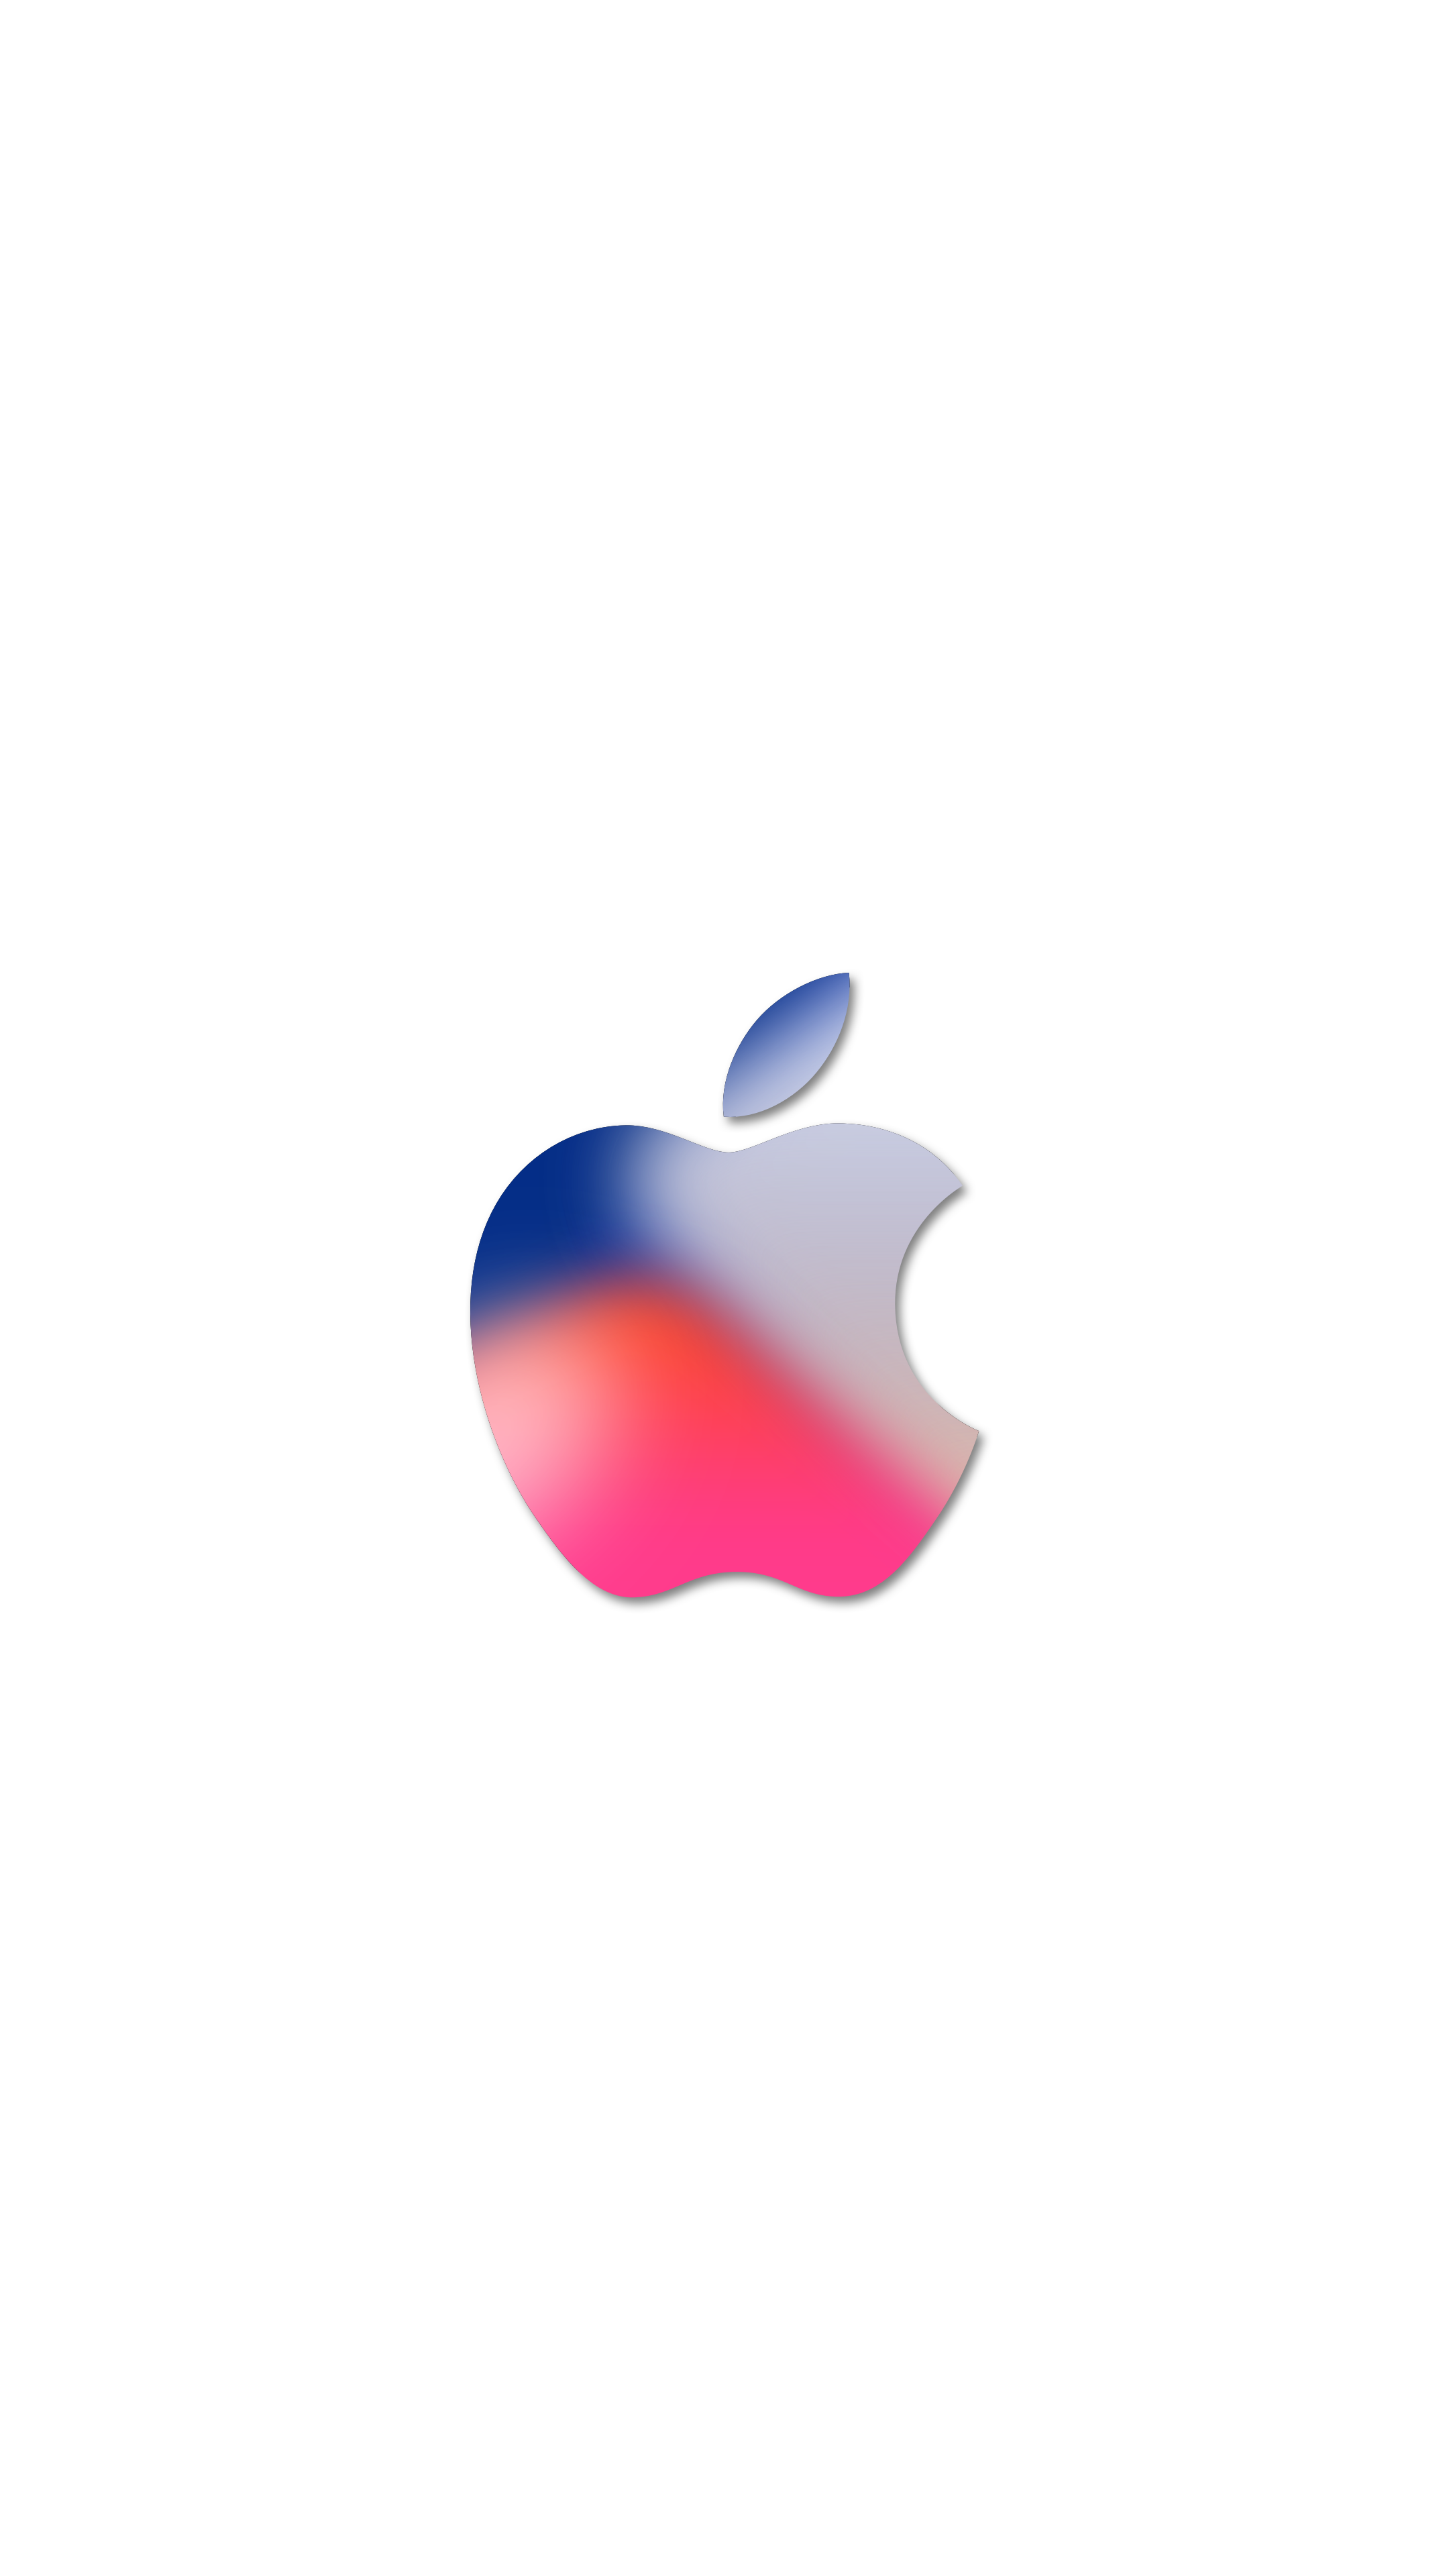 Iphone X Apple Logo Wallpaper Hd